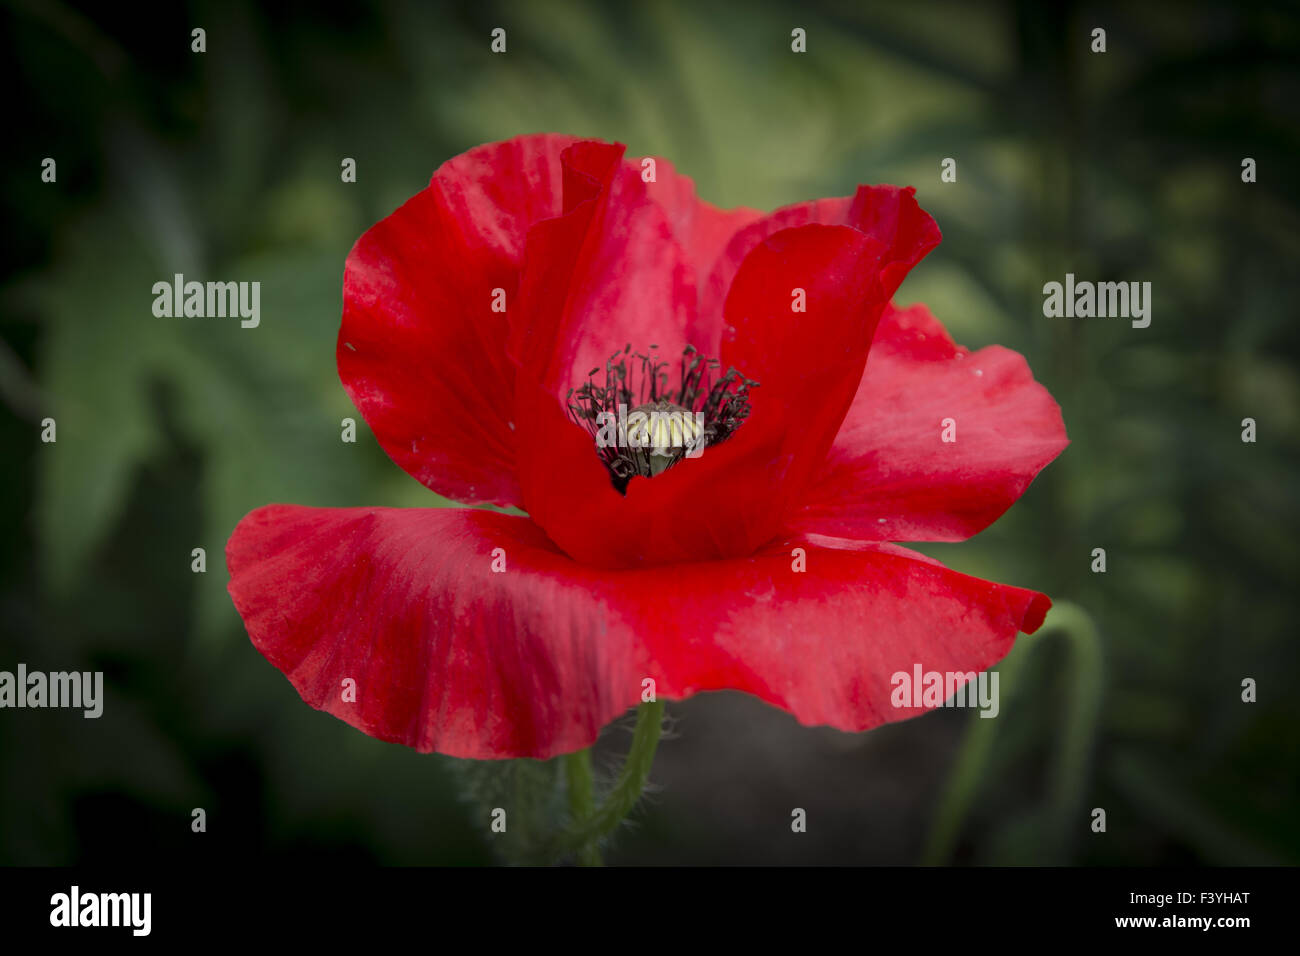 Red Poppy with black pistils Stock Photo